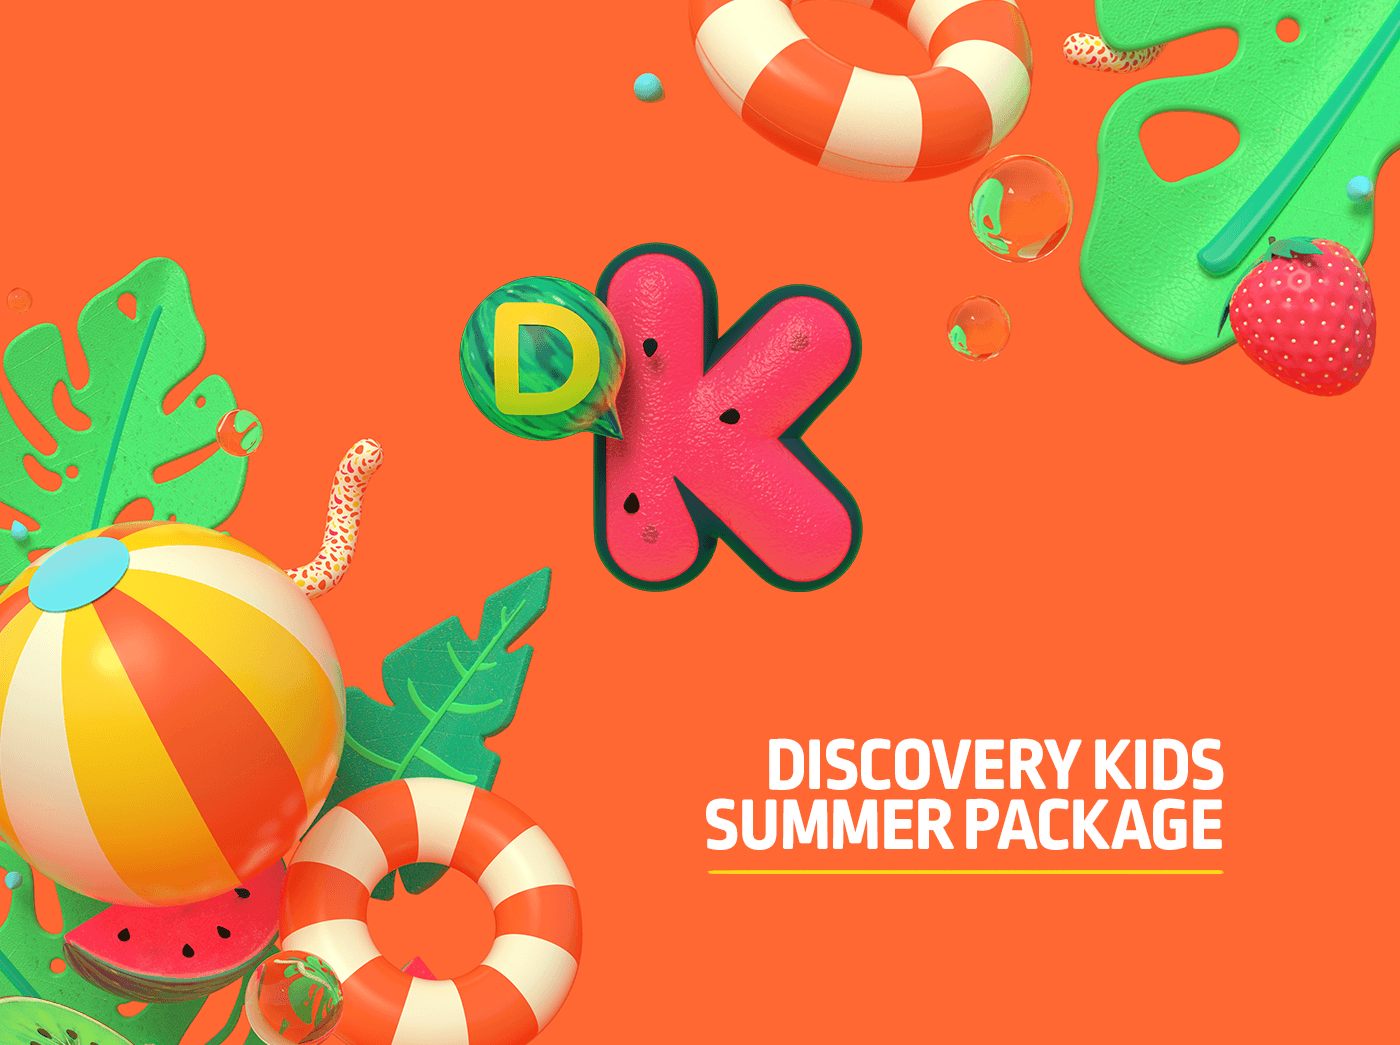 Discovery Kids Logo - LogoDix